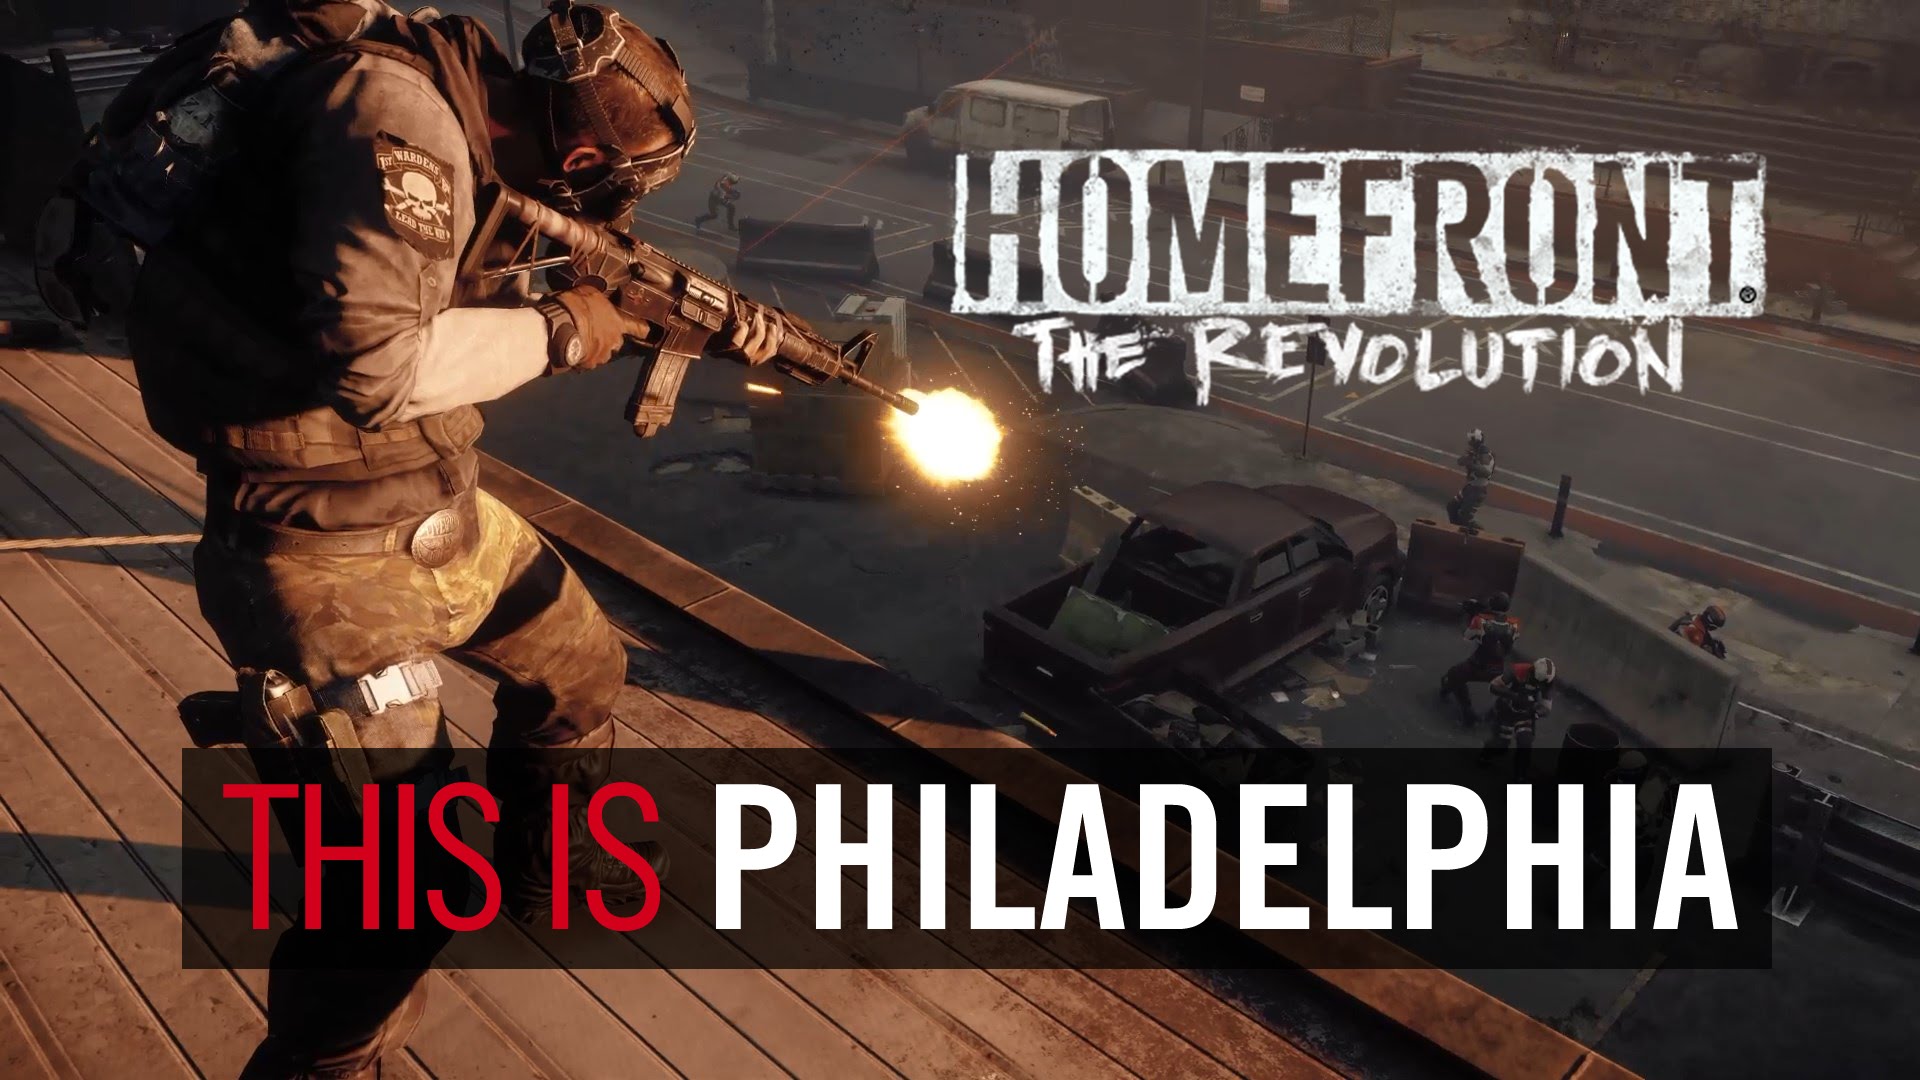 Homefront: The Revolution "This is Philadelphia" Trailer